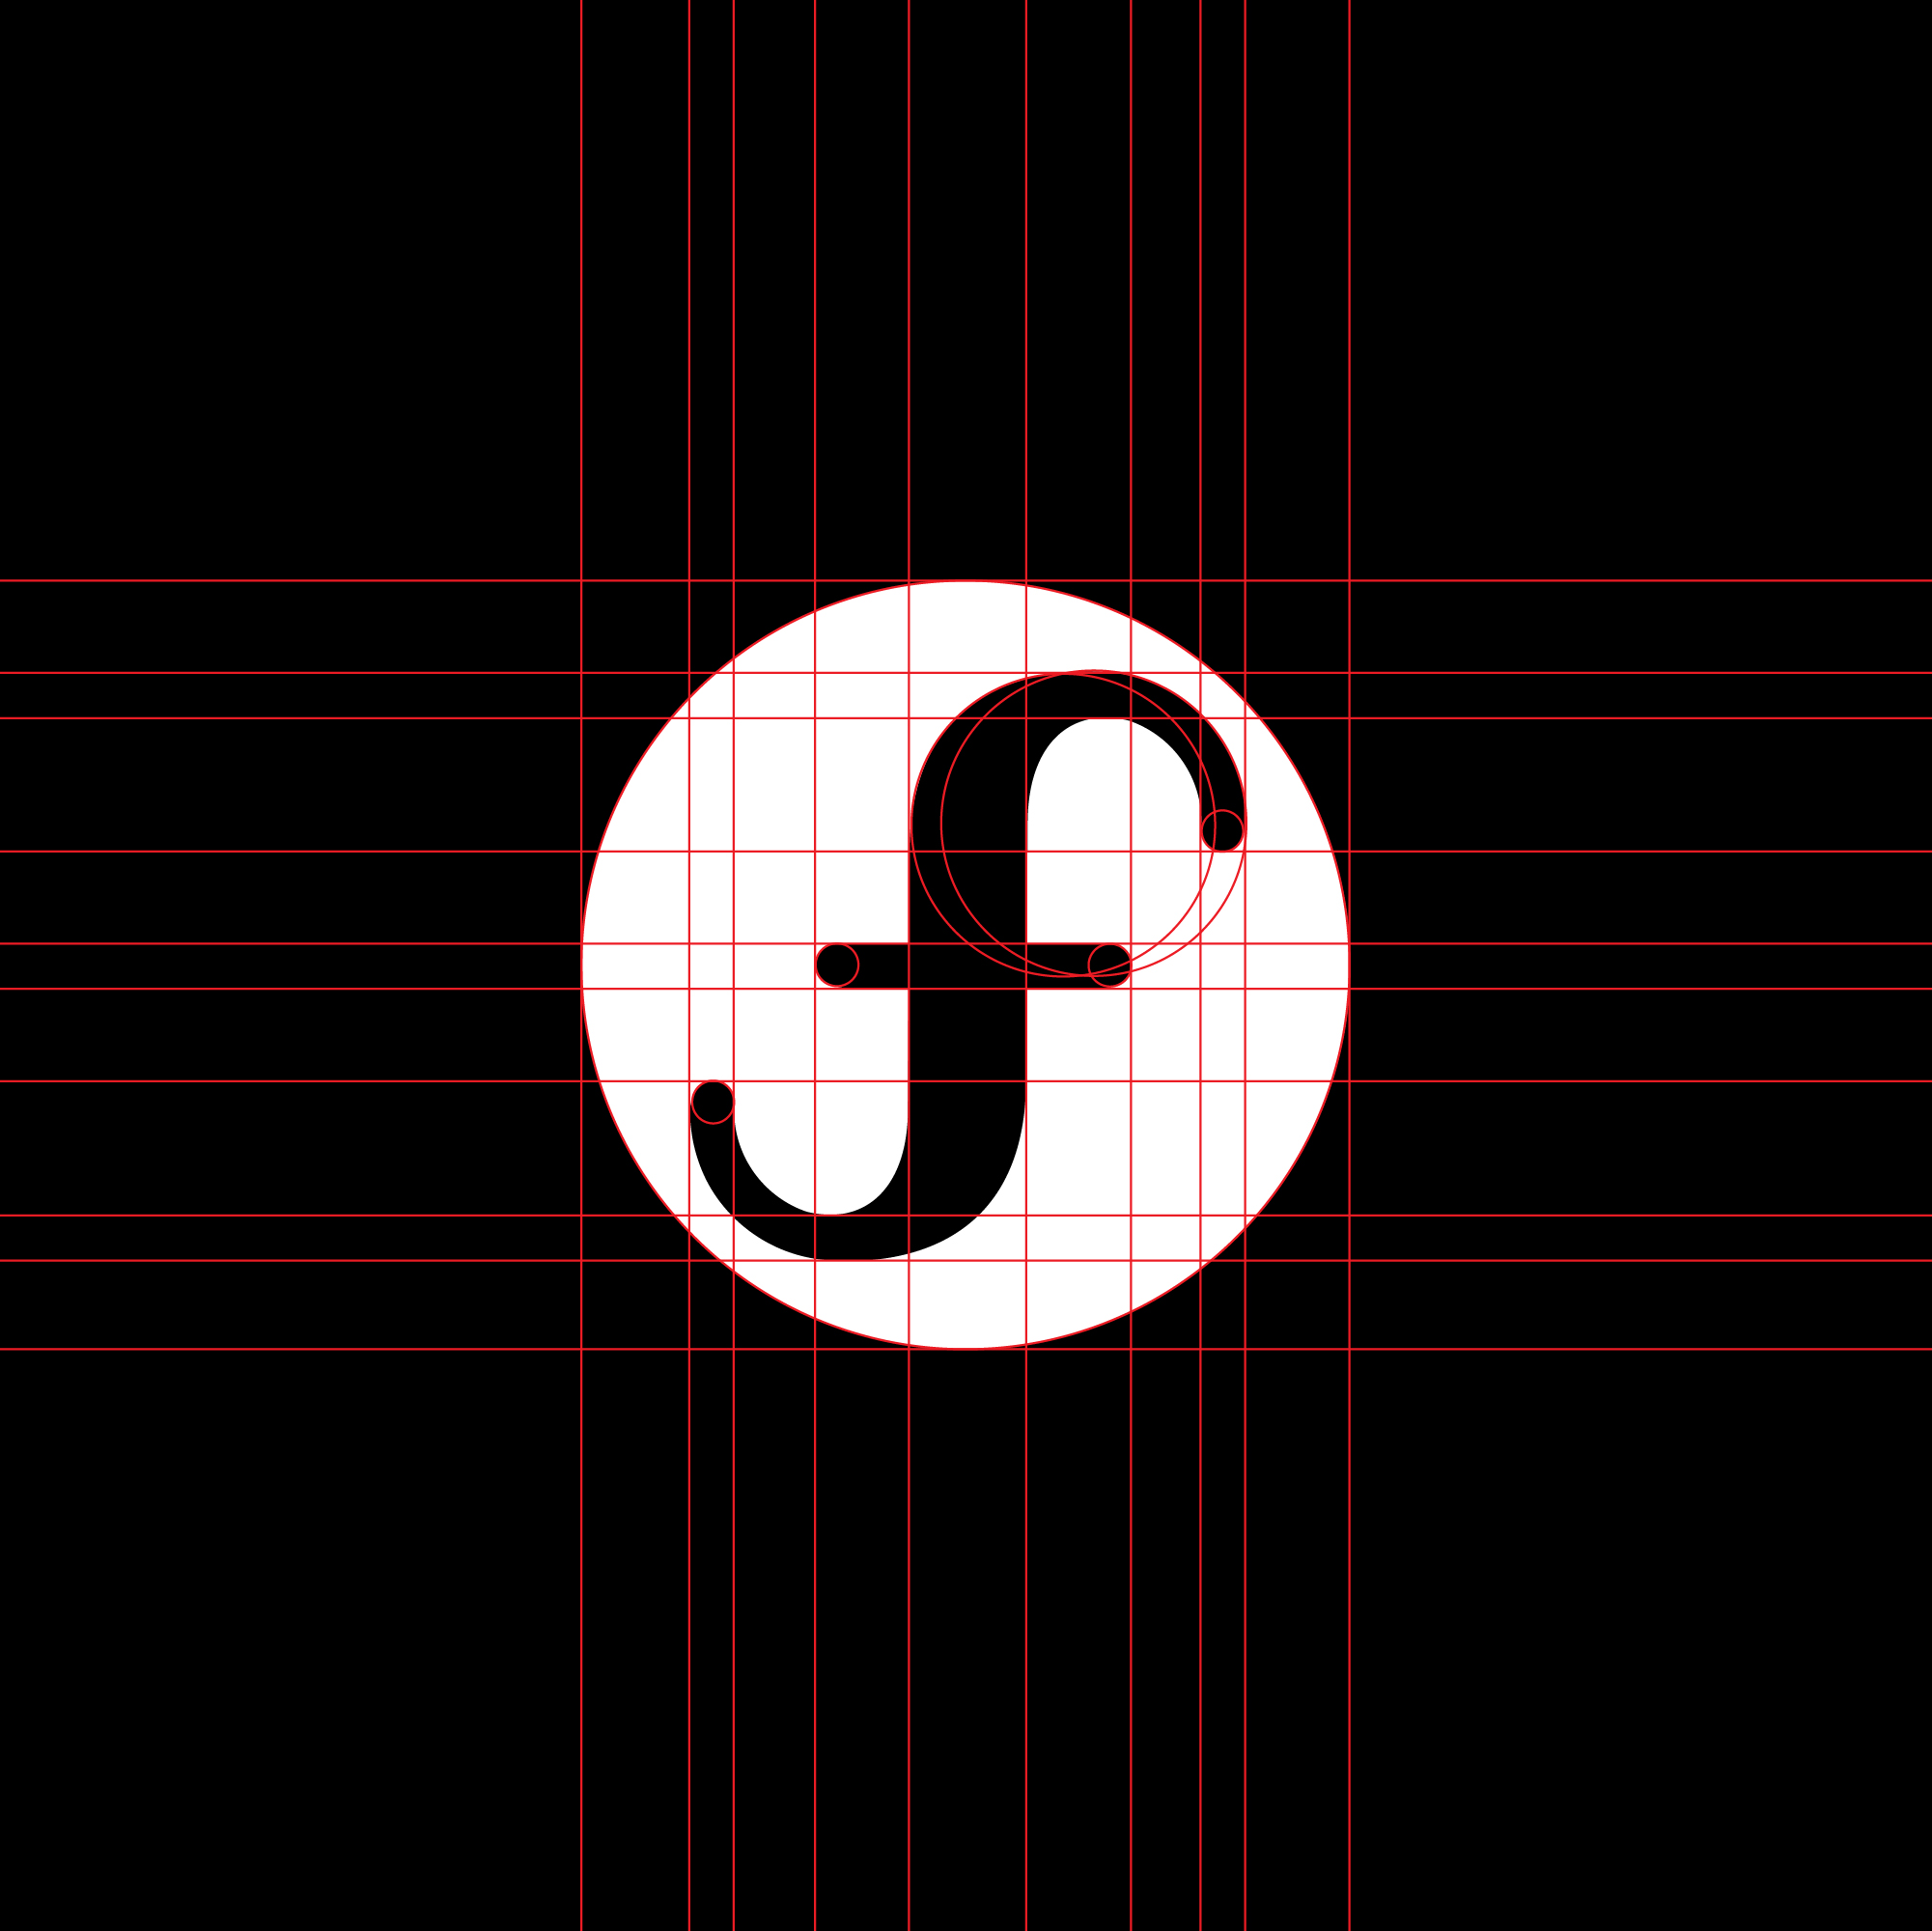 logo-design-black-white-minimalist-letter-circle-round